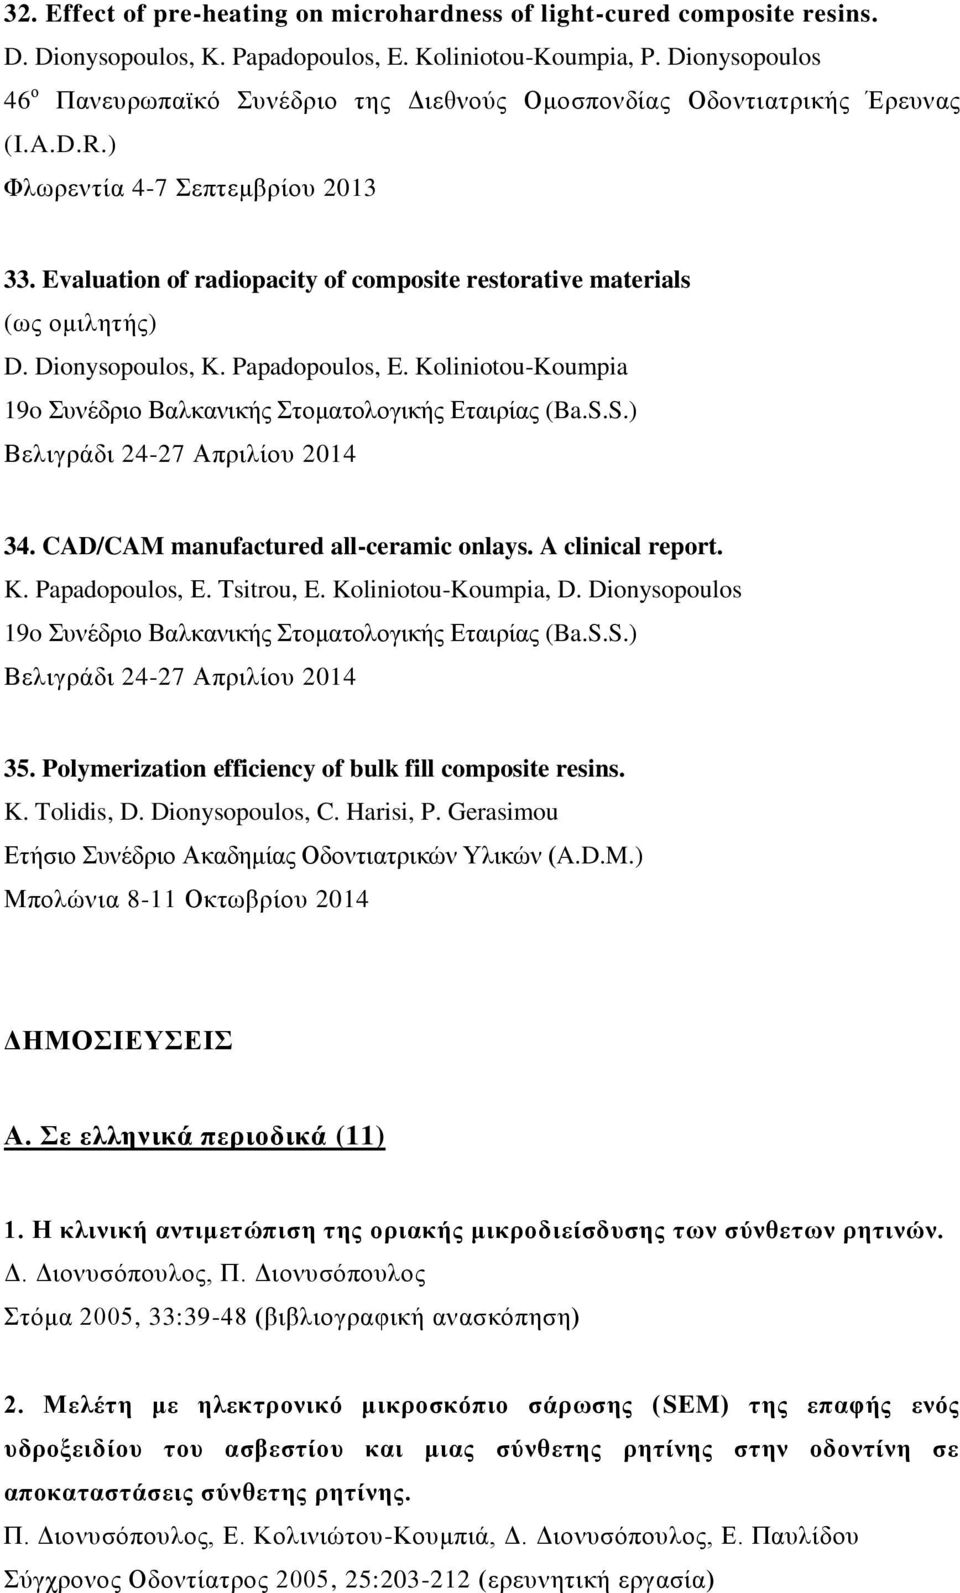 Dionysopoulos, K. Papadopoulos, E. Koliniotou-Koumpia 19o πλέδξην Βαιθαληθήο ηνκαηνινγηθήο Δηαηξίαο (Ba.S.S.) Βειηγξάδη 24-27 Απξηιίνπ 2014 34. CAD/CAM manufactured all-ceramic onlays.